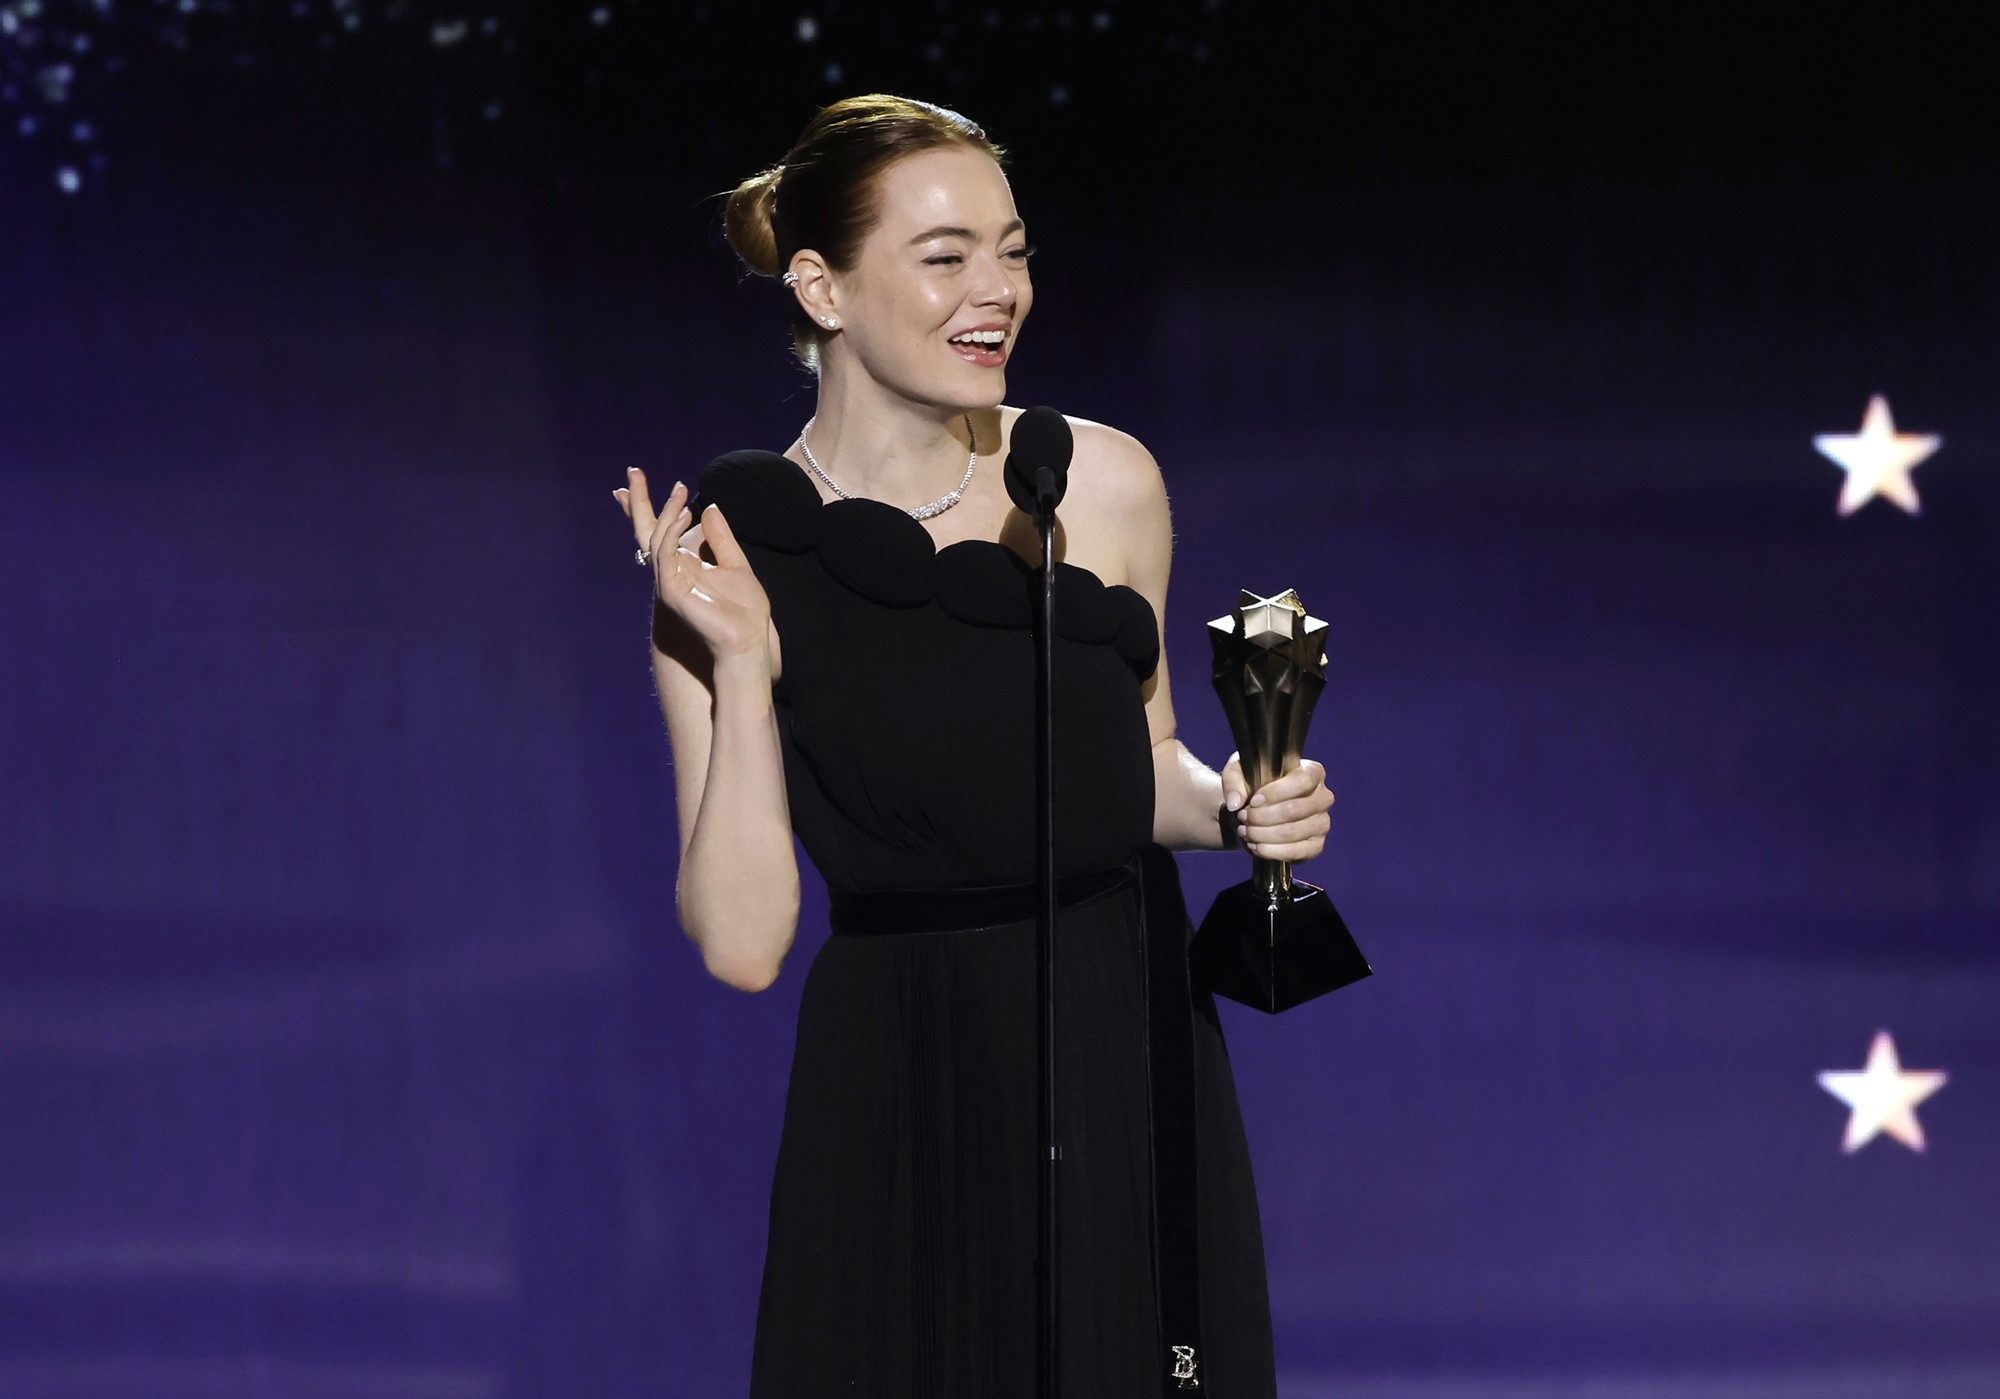 Emma stone holding an award. 